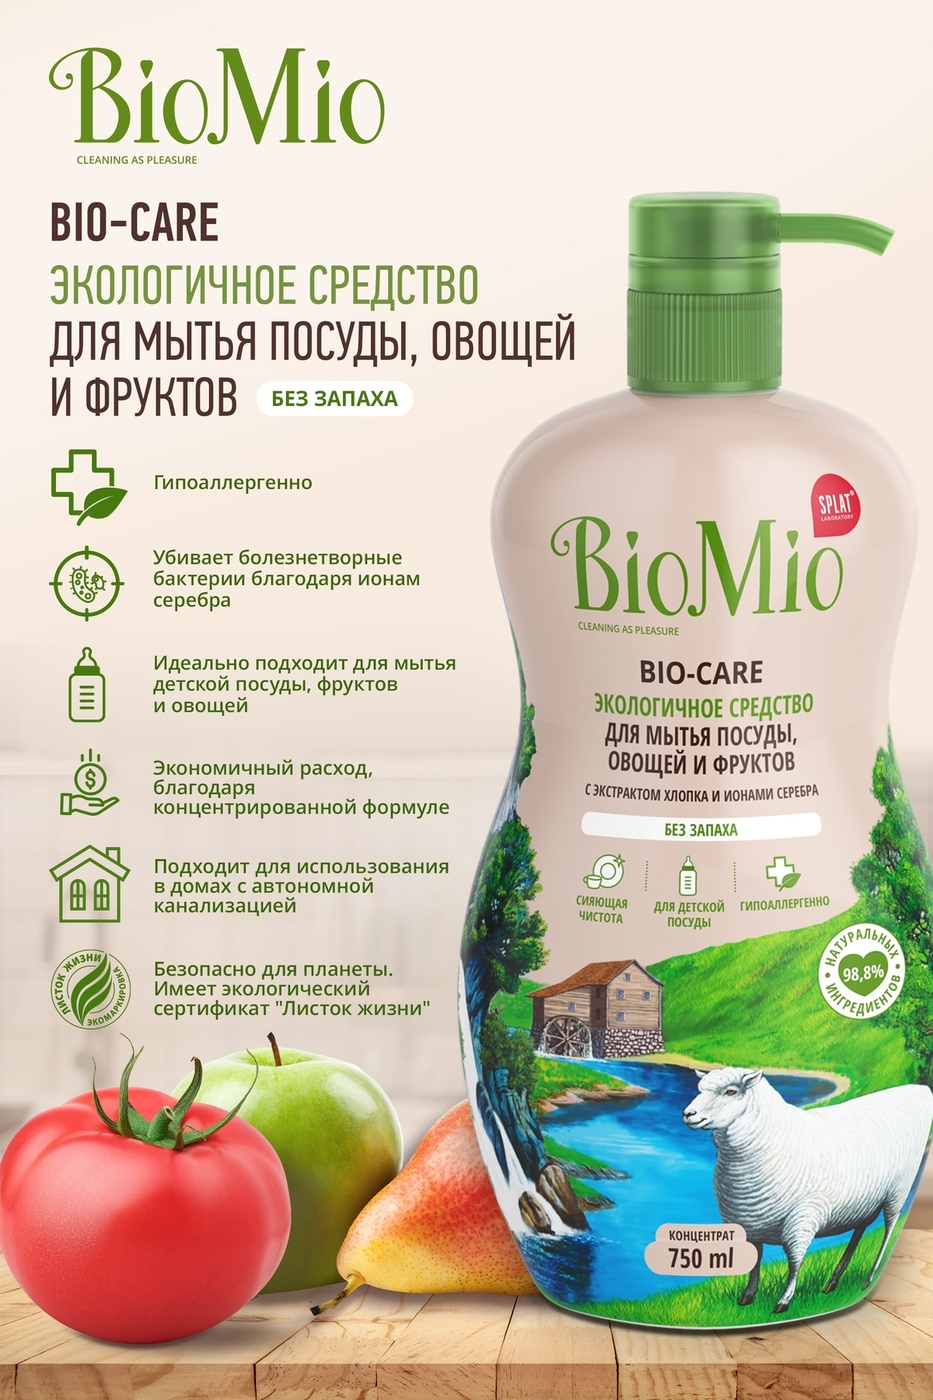 Biomio для мытья. Средство для мытья посуды Биг Мио. Средство для посуды био Мио. Био Мио для посуды с мандарином. Средство для мытья овощей и фруктов "BIOMIO" 315 мл.